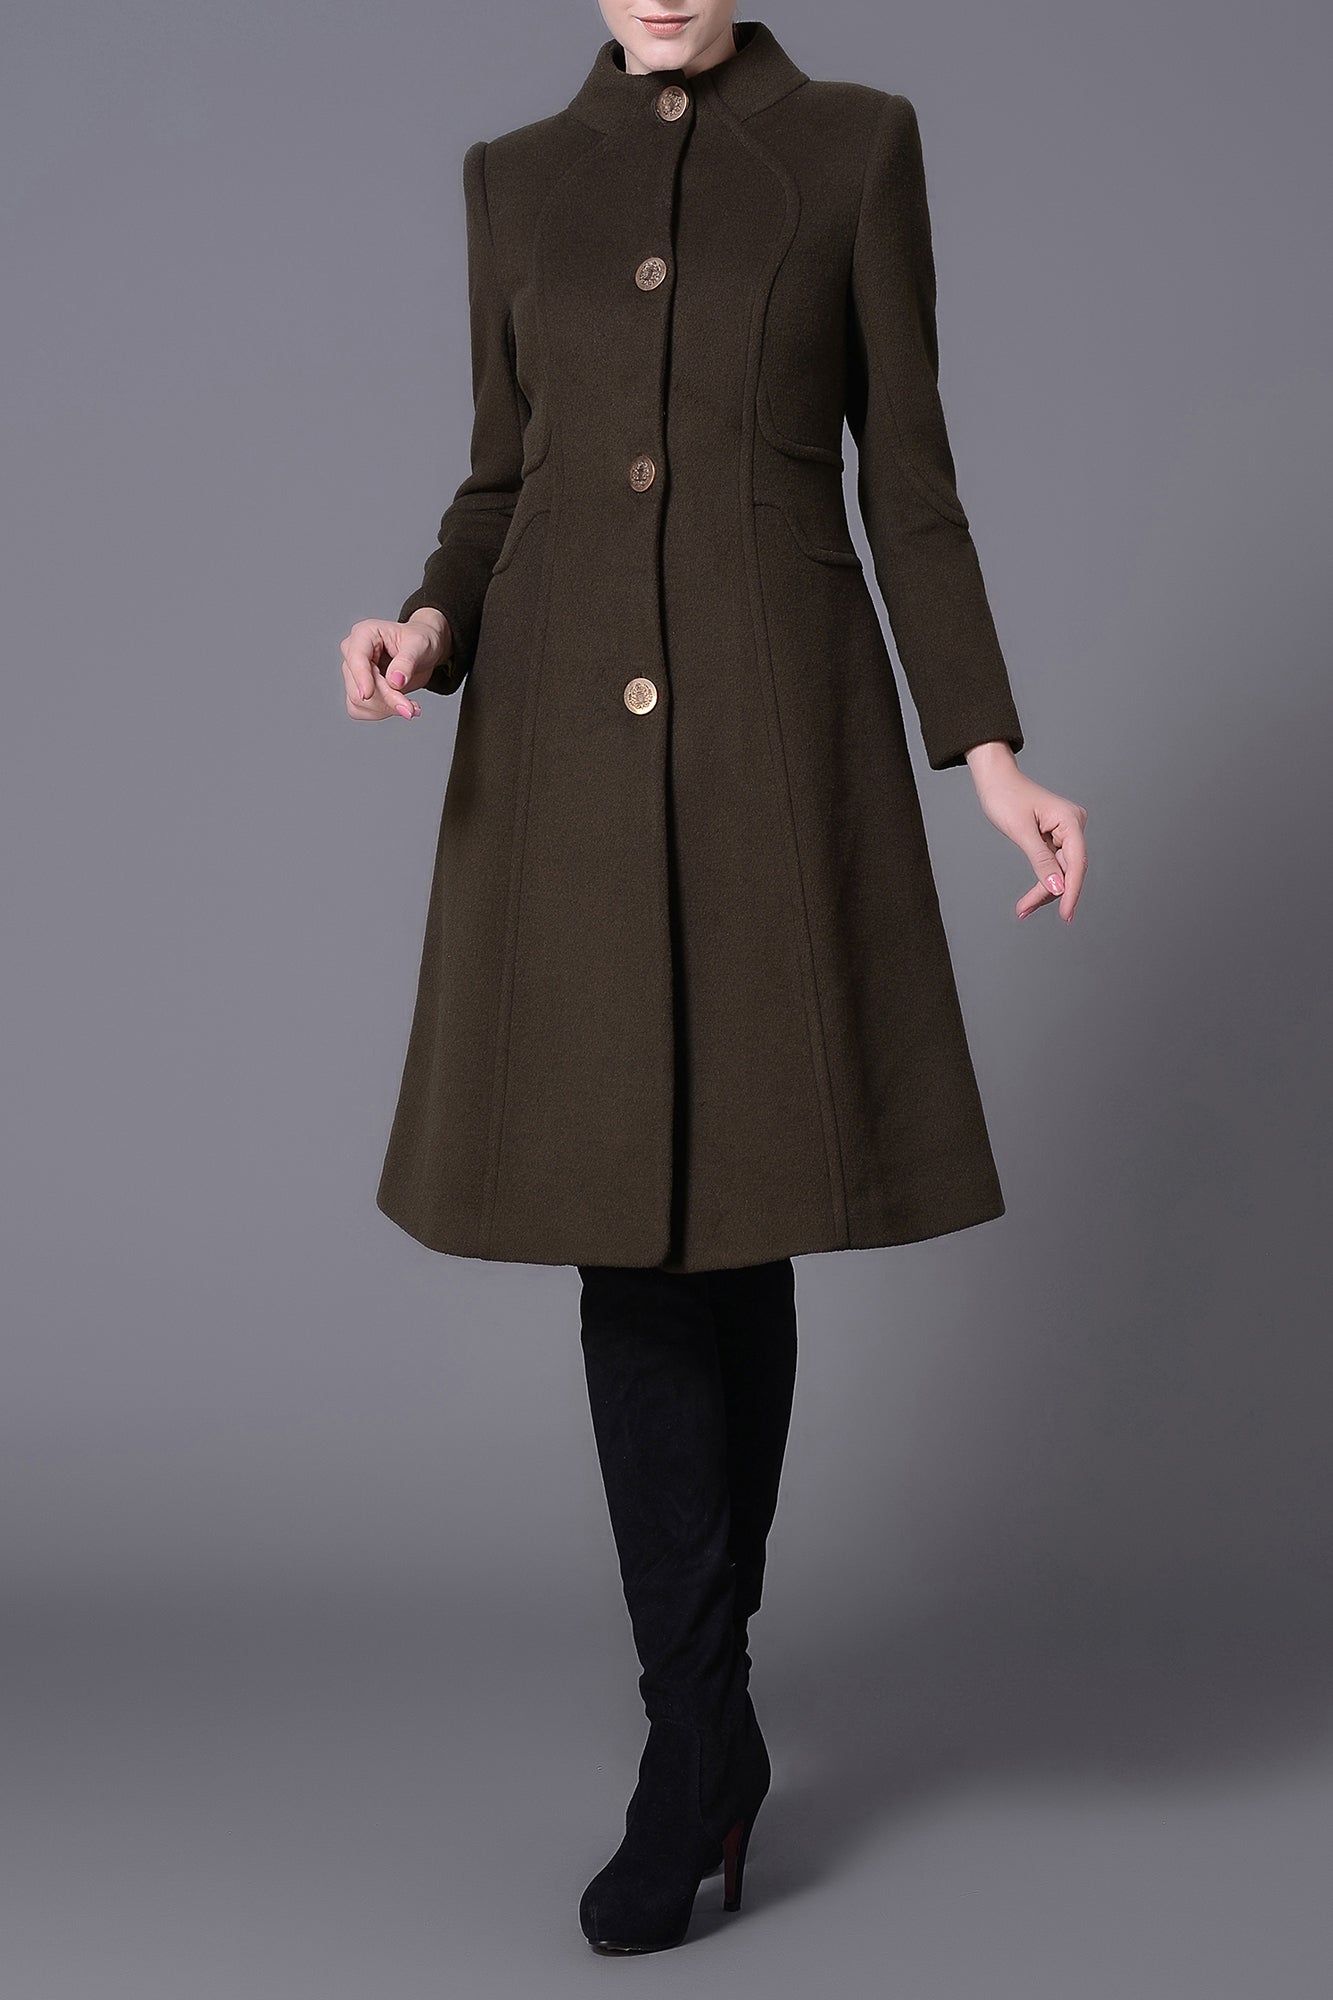 Athena Olive Green Savvy Winter Wool Coat